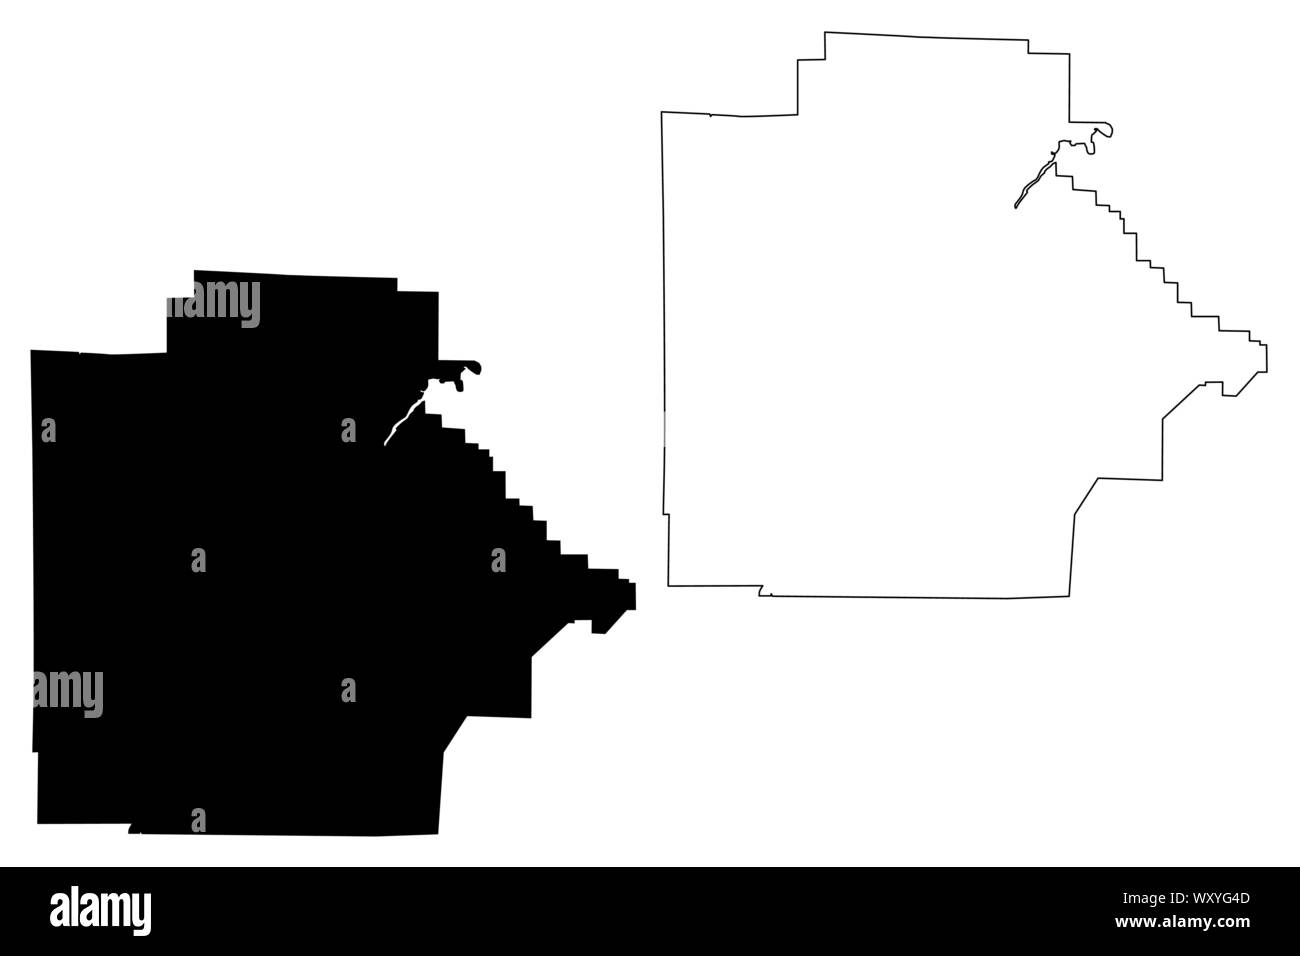 Tuscaloosa County, Alabama (Grafschaften in Alabama, Vereinigte Staaten von Amerika, USA, USA, USA) Karte Vektor-illustration, kritzeln Skizze Tuscaloosa map Stock Vektor